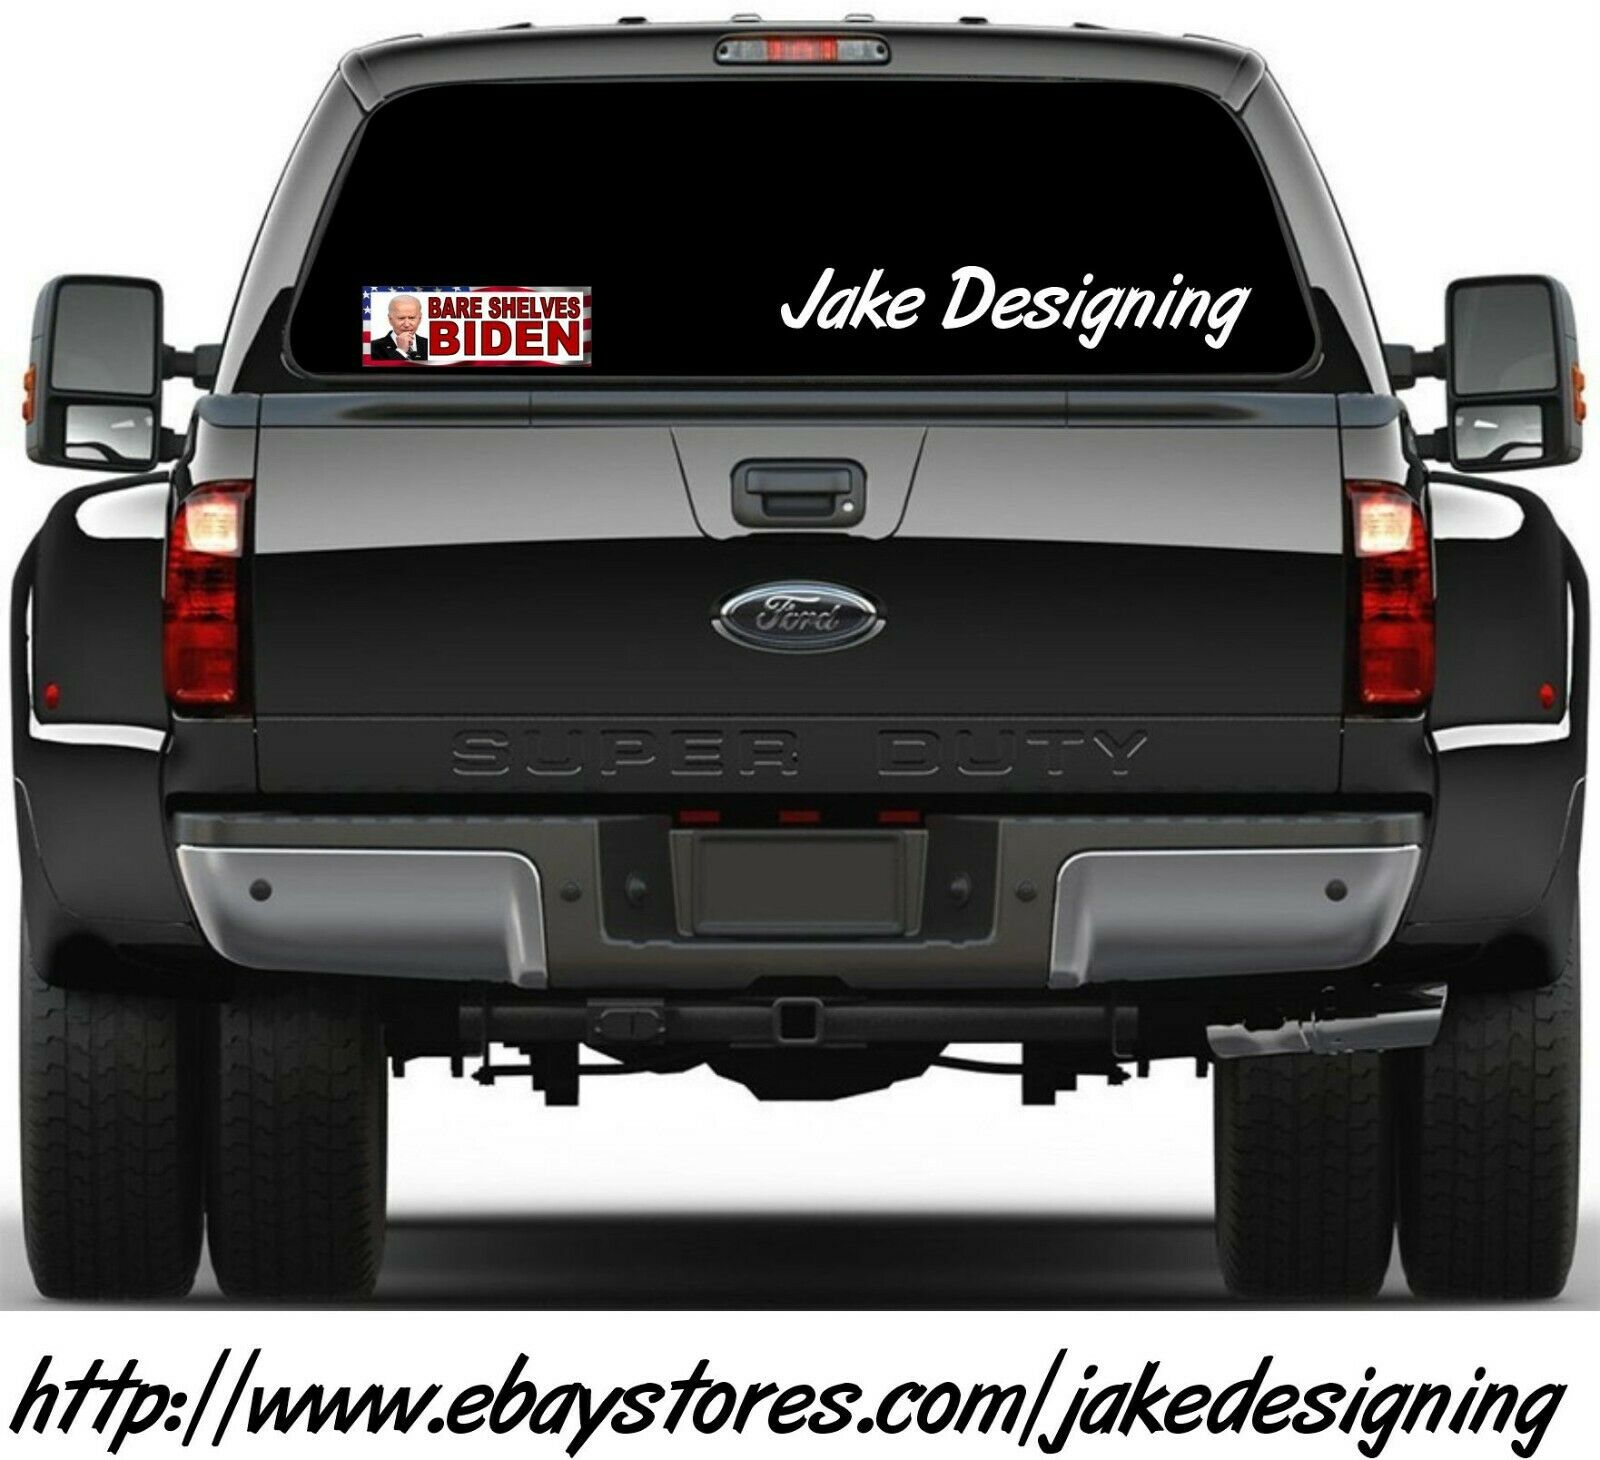 Bare Shelves Biden USA Style Bumper Sticker or Magnet Anti Joe Biden FJB FU46 - Powercall Sirens LLC